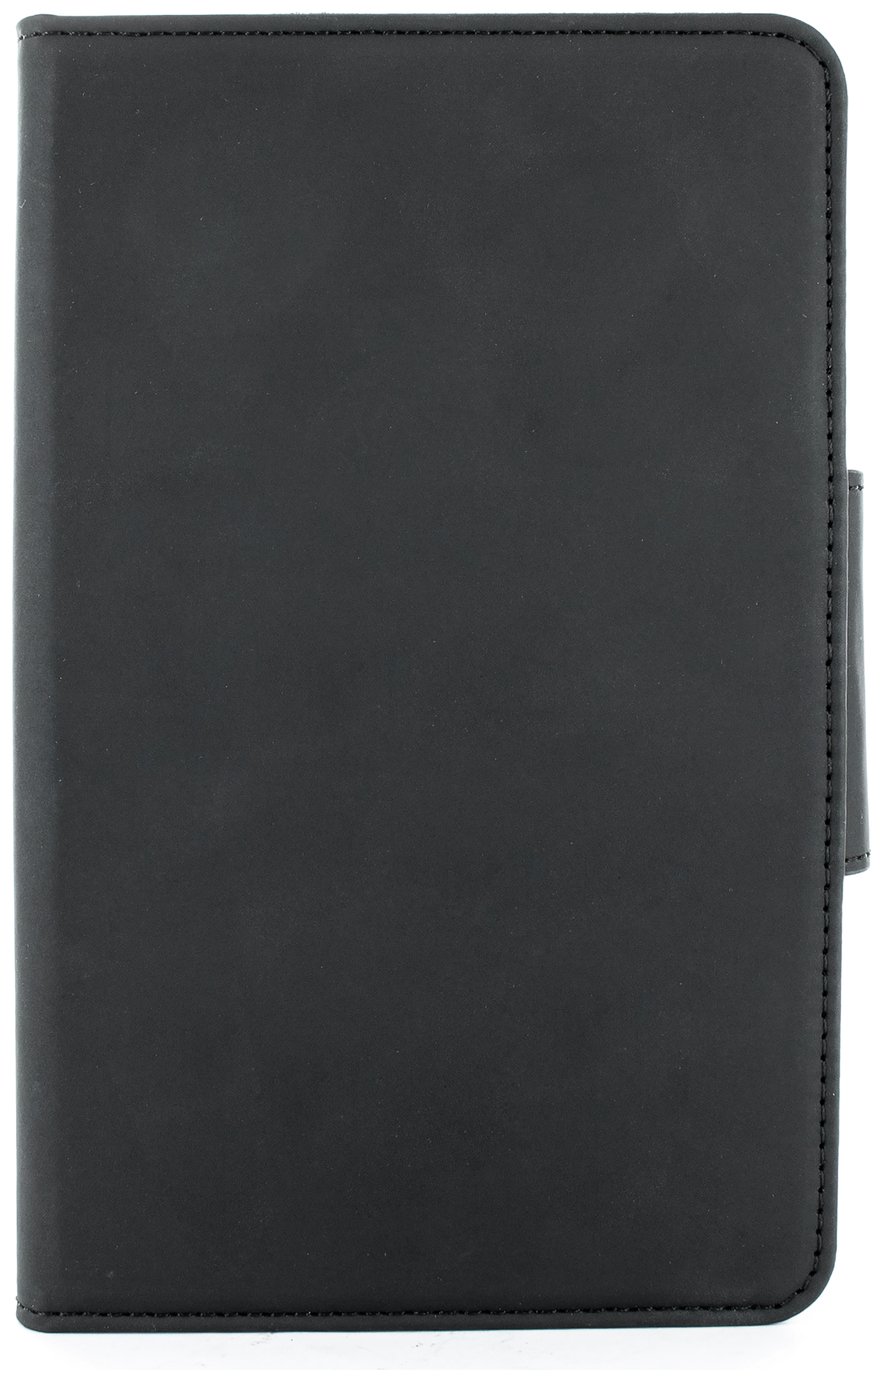 Proporta Samsung Galaxy Tab A 8.0 2018 Tablet Cover - Black